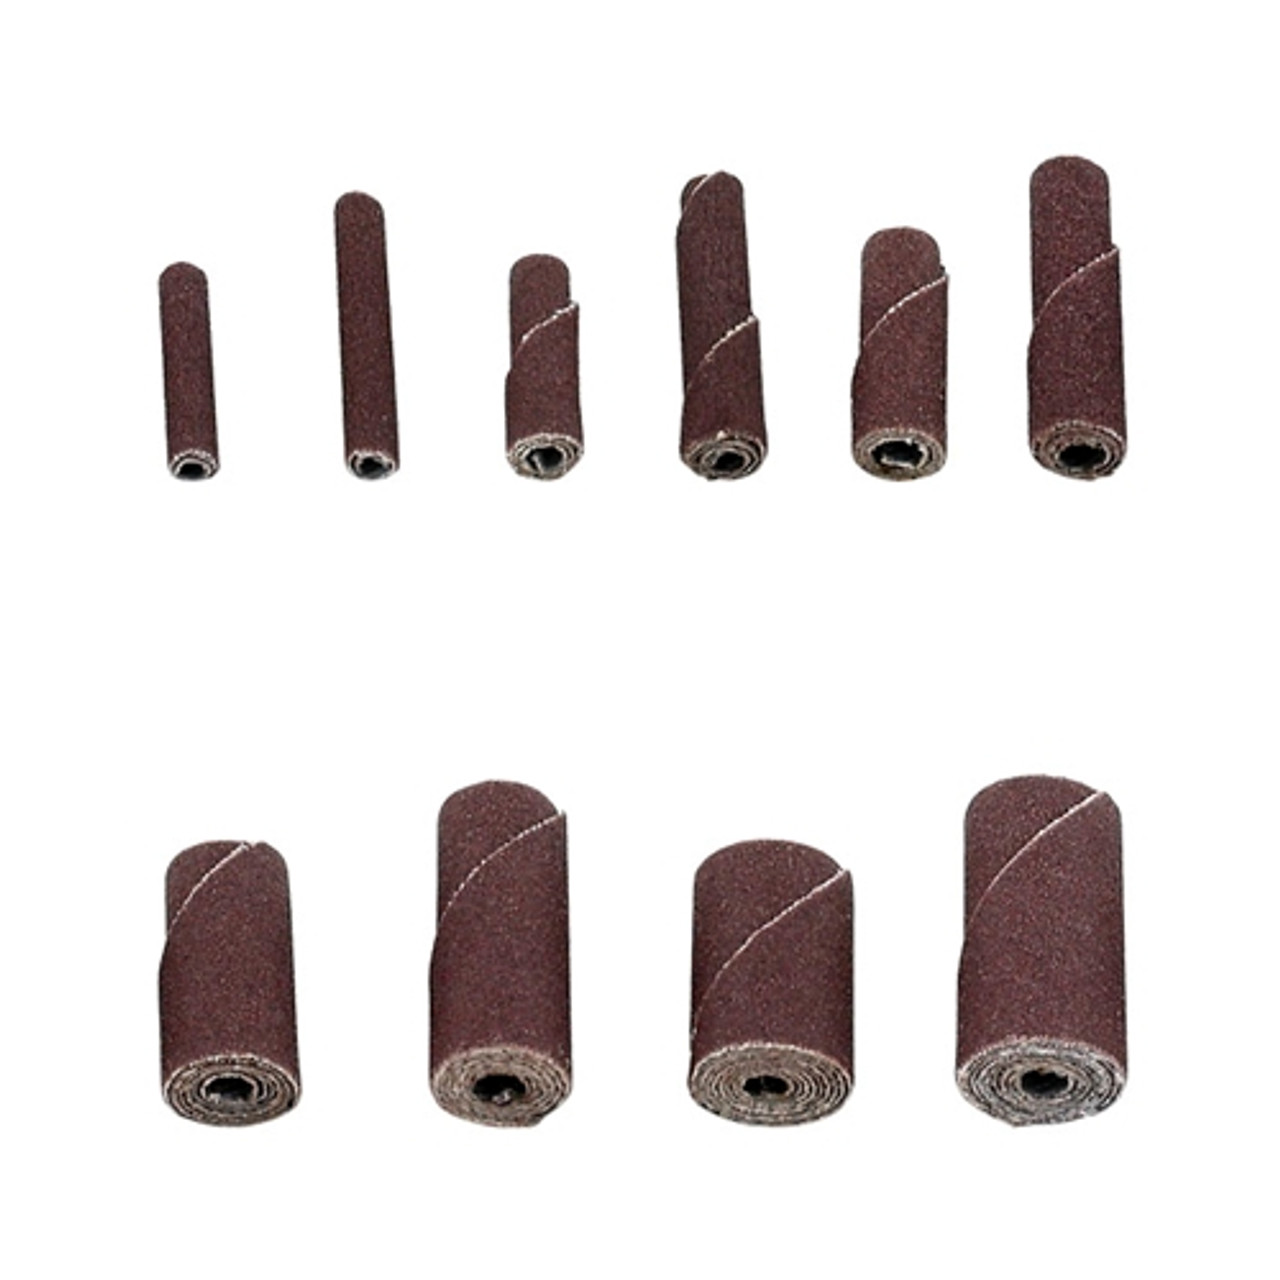 Abrasive Cartridge Rolls - 3/16" x 3/4" x 3/32", 120 Grit